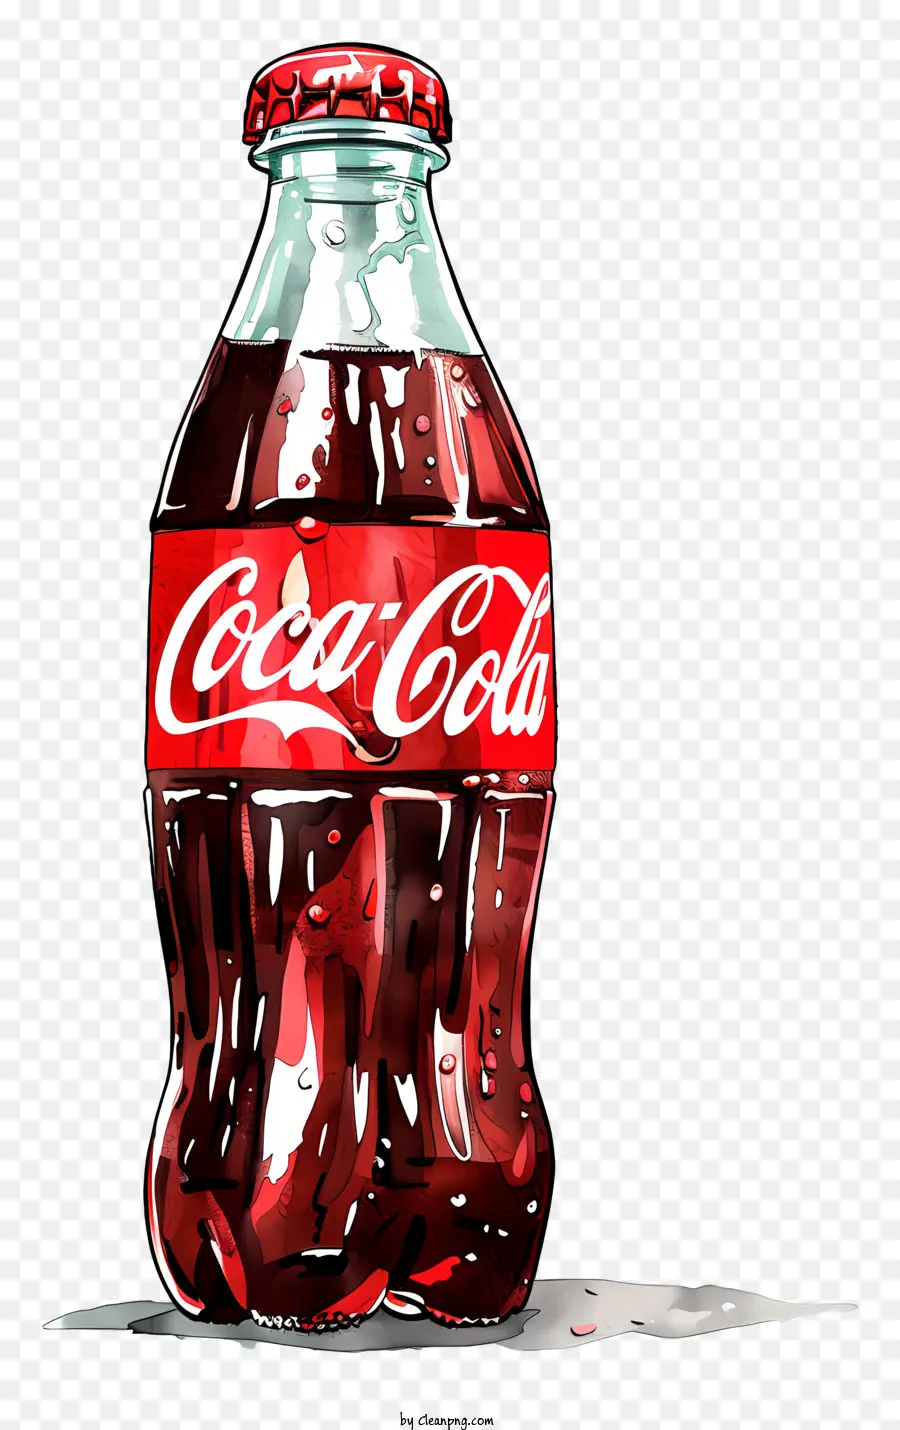 coca cola - Coca Cola Bottle Painting su sfondo nero